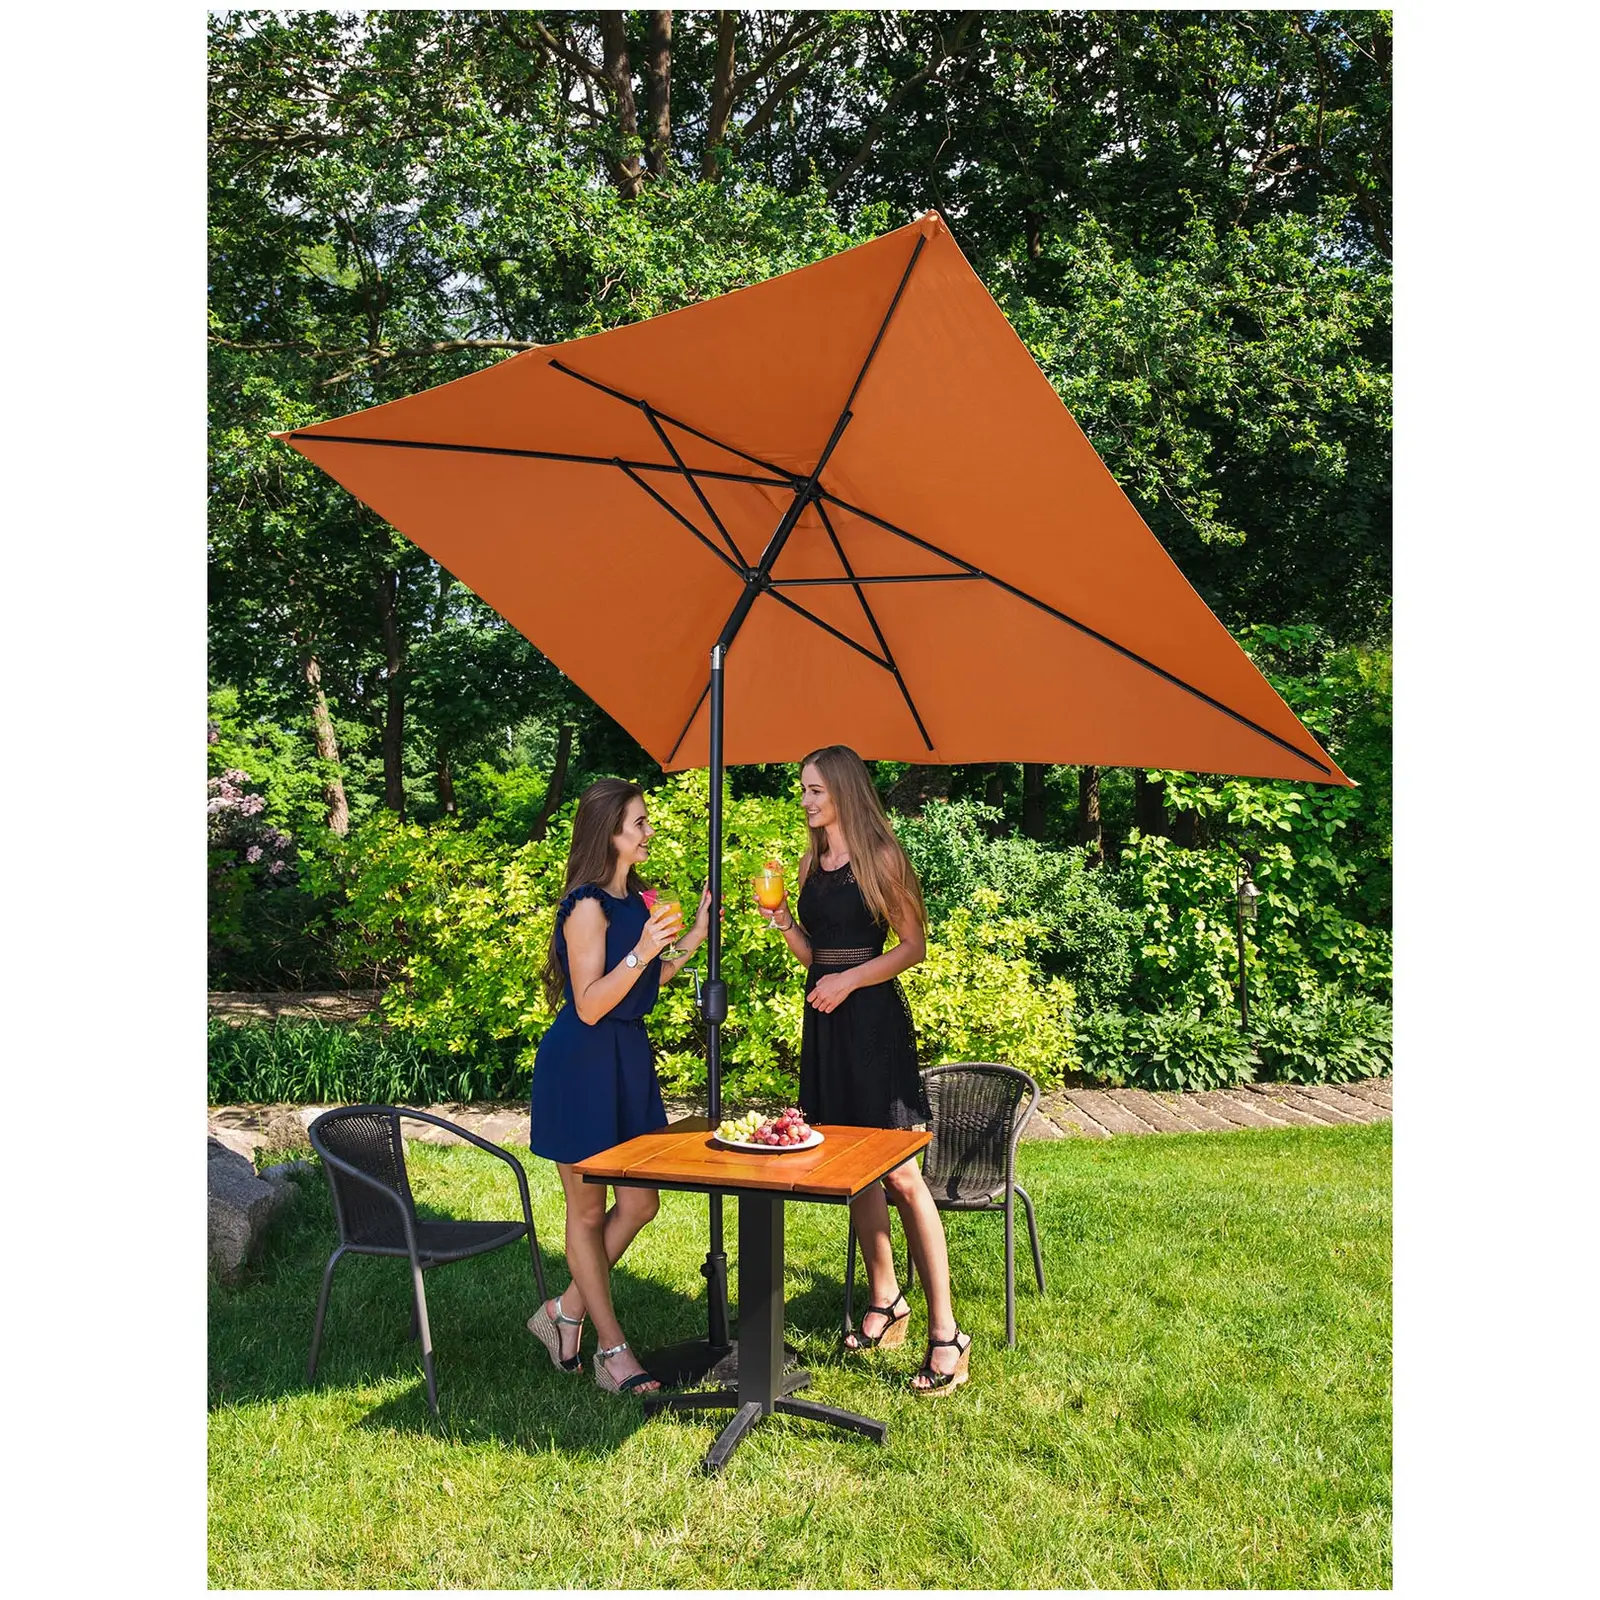 Factory second Large Outdoor Umbrella - orange - rectangular - 200 x 300 cm - tiltable